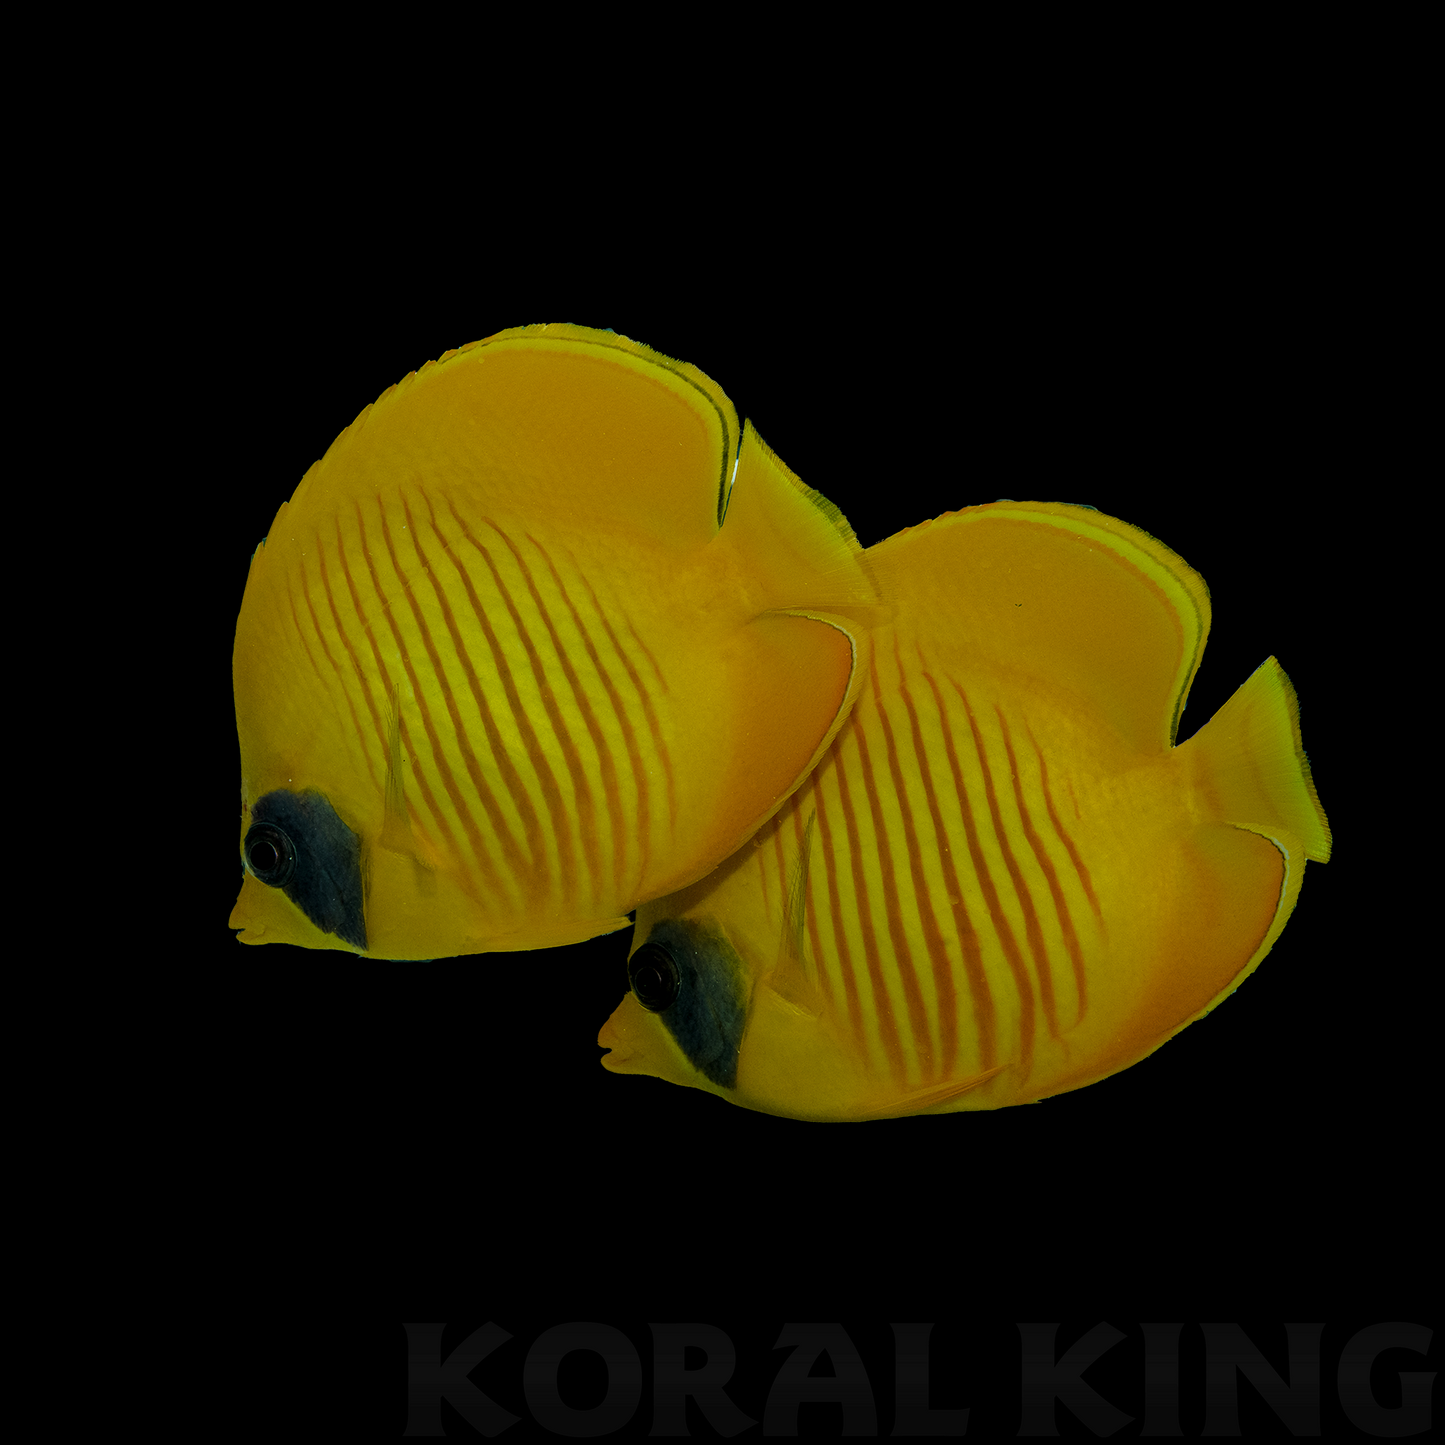 Pair of Golden Butterflyfish